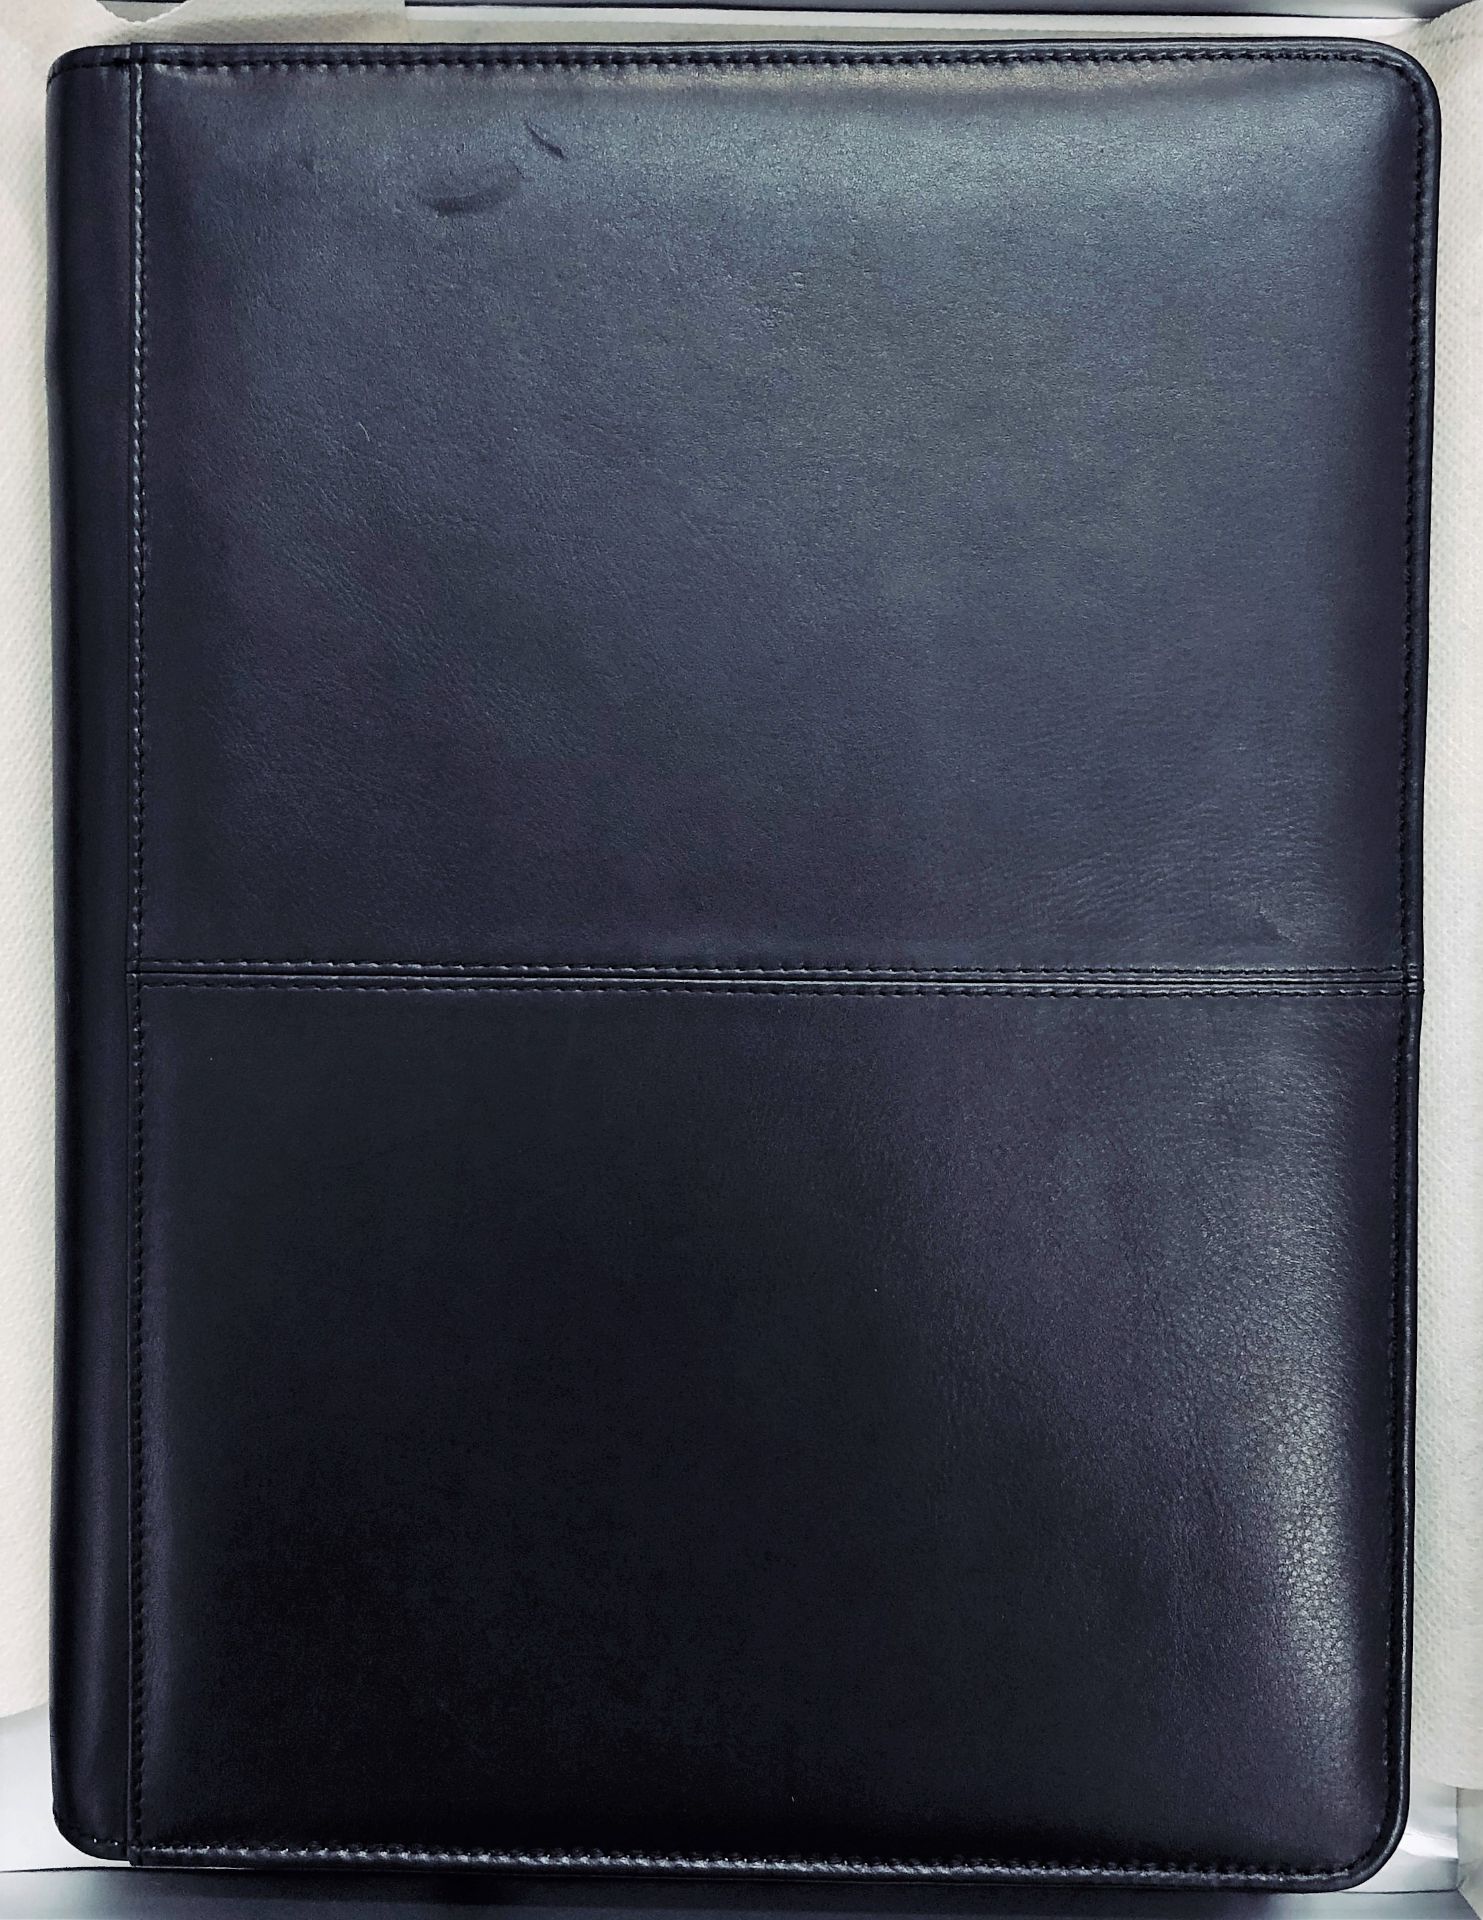 V Brand New Samsonite Black Leather Executive Folder With One Inner Pocket-Credit Card Pockets- - Image 2 of 3